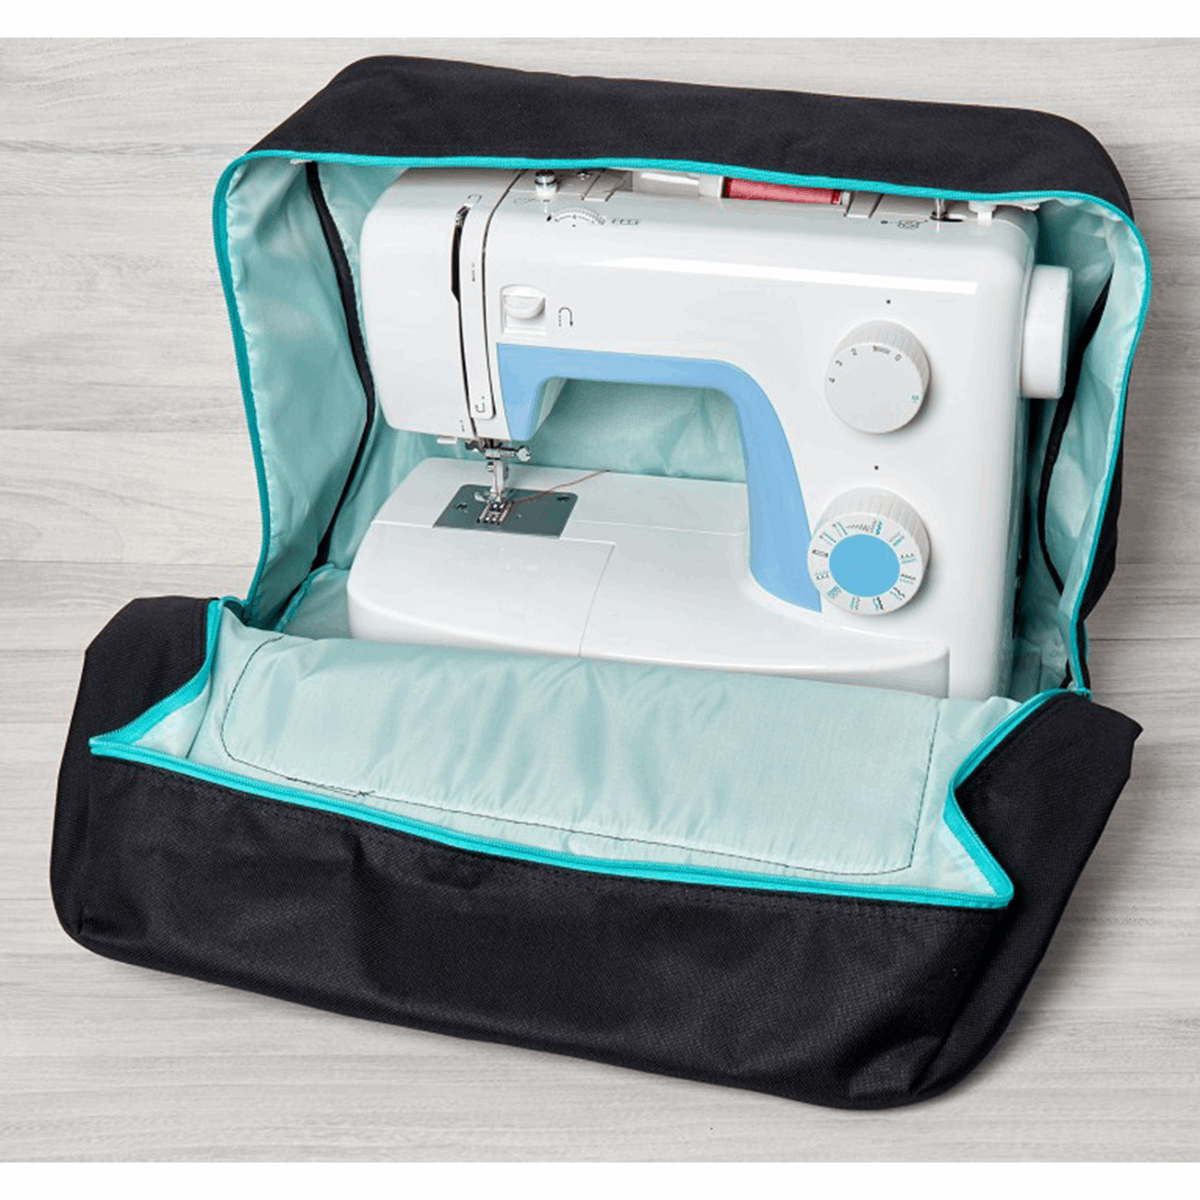 Sewing Machine Bag - Turq Green